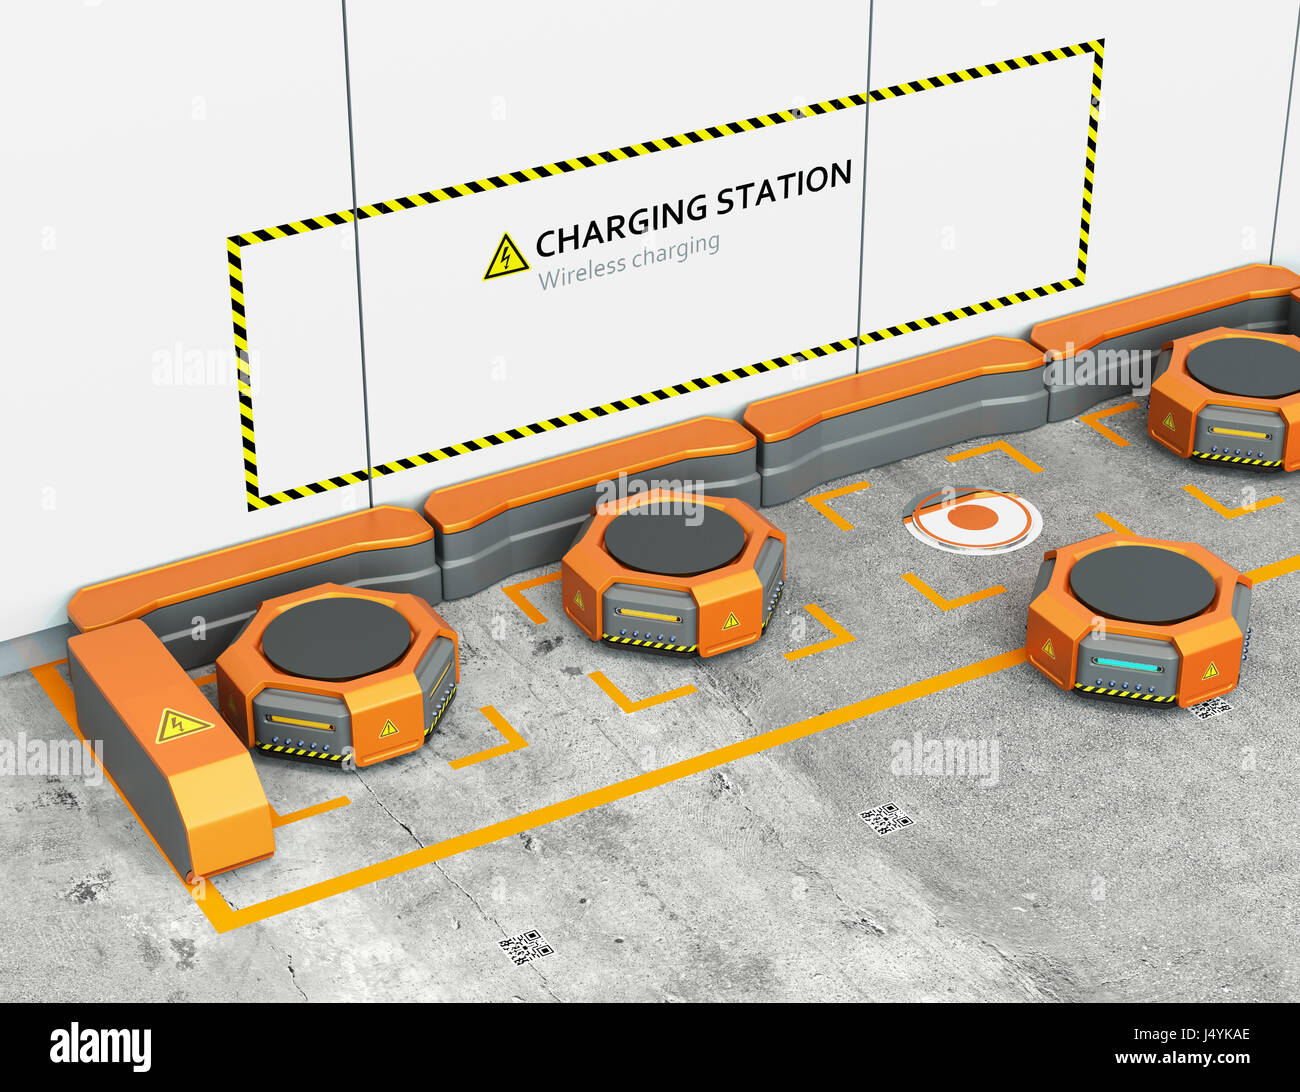 Warehouse robots charging at charging station. Advanced warehouse robotics technology concept. 3D rendering image. Stock Photo